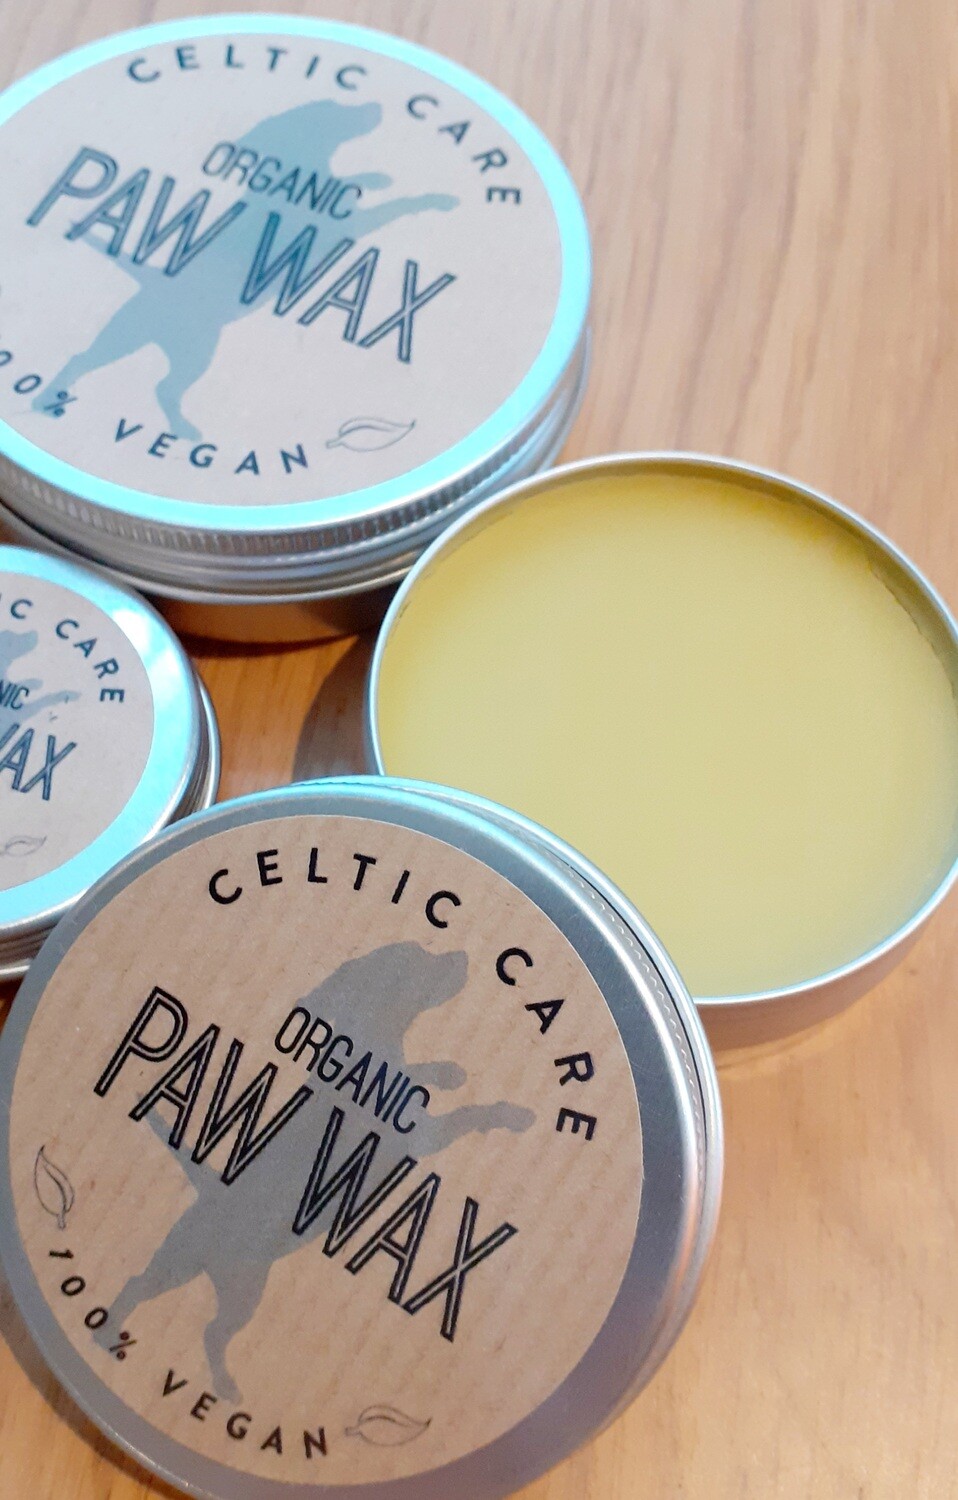 Celtic Care Paw Wax